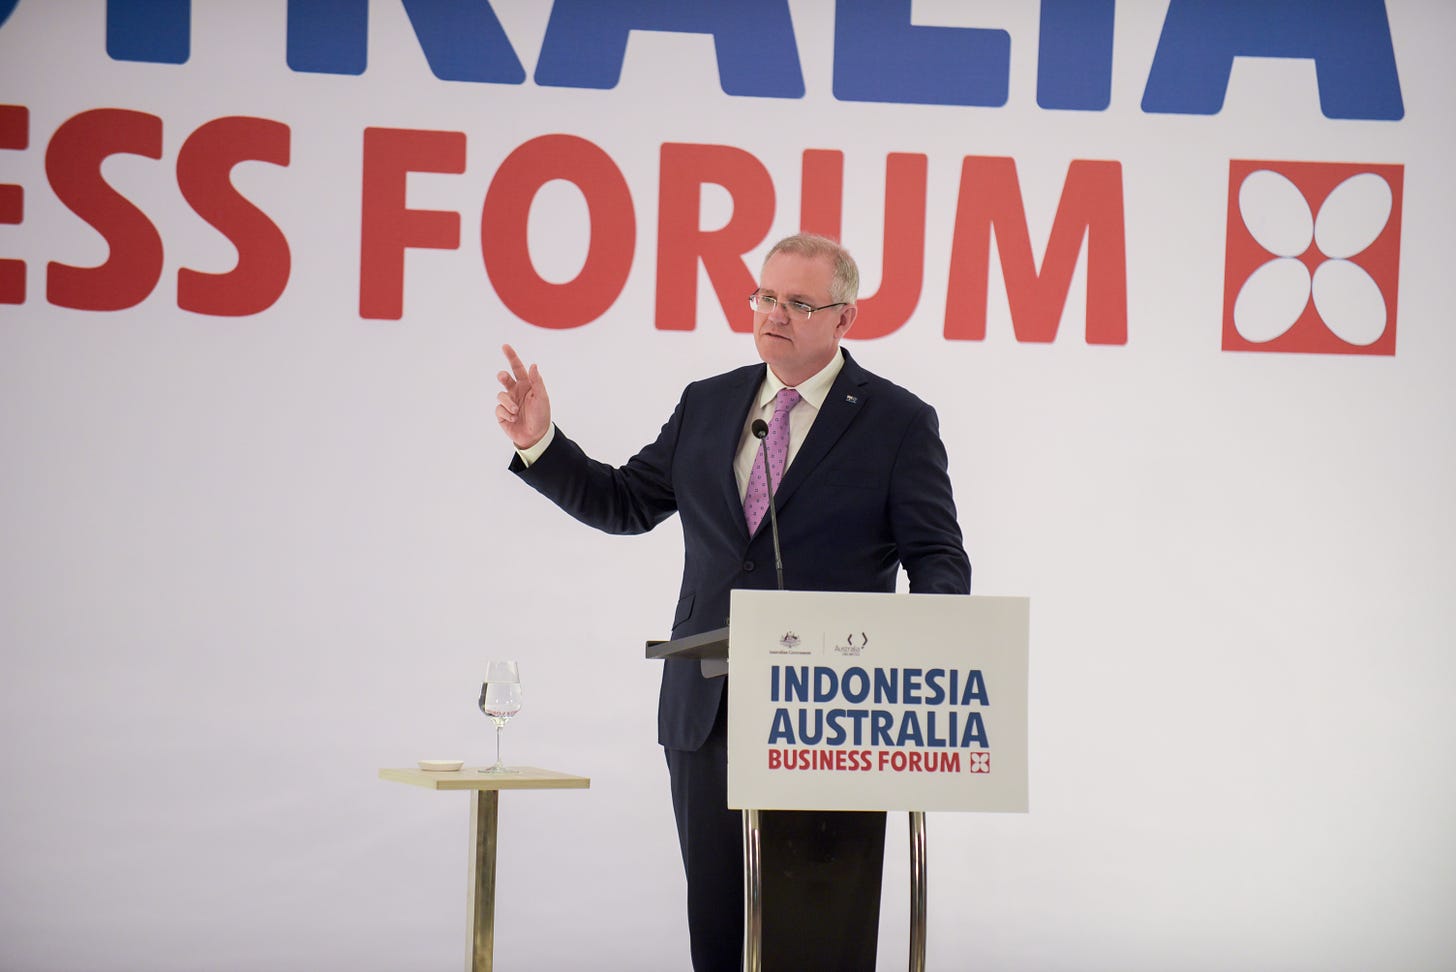 Scott Morrison speaking at a forum in Indonesia.